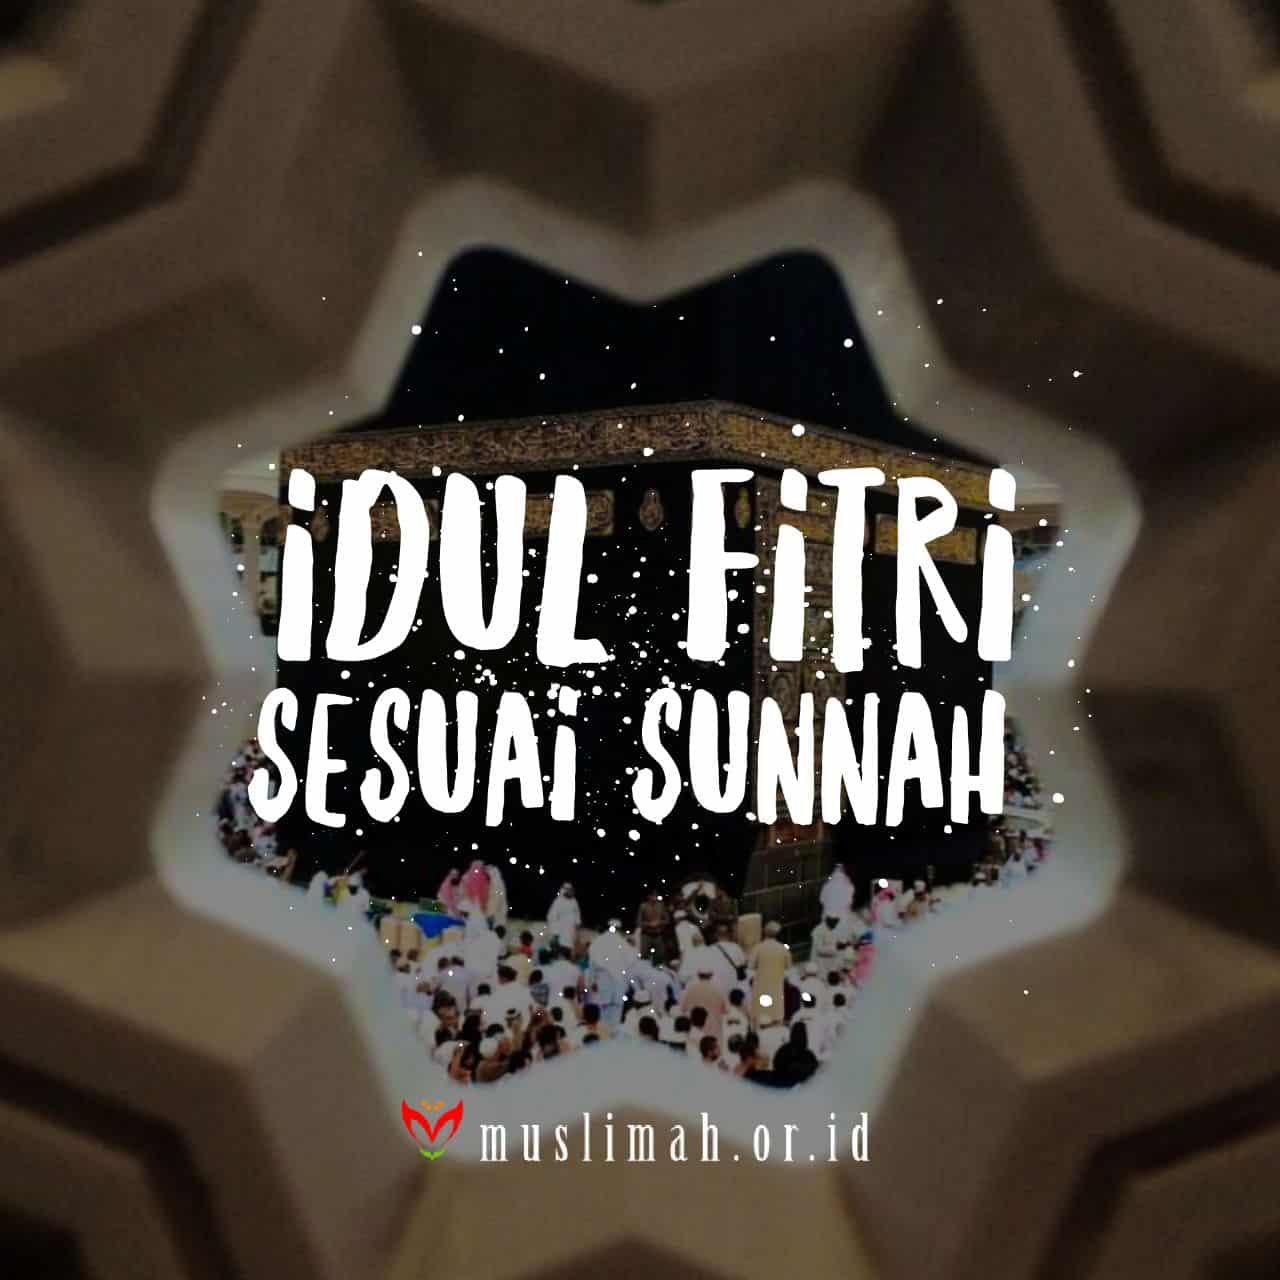 Shalat Idul Fitri Muslim.or.id. Idul Fithri Sesuai Sunnah